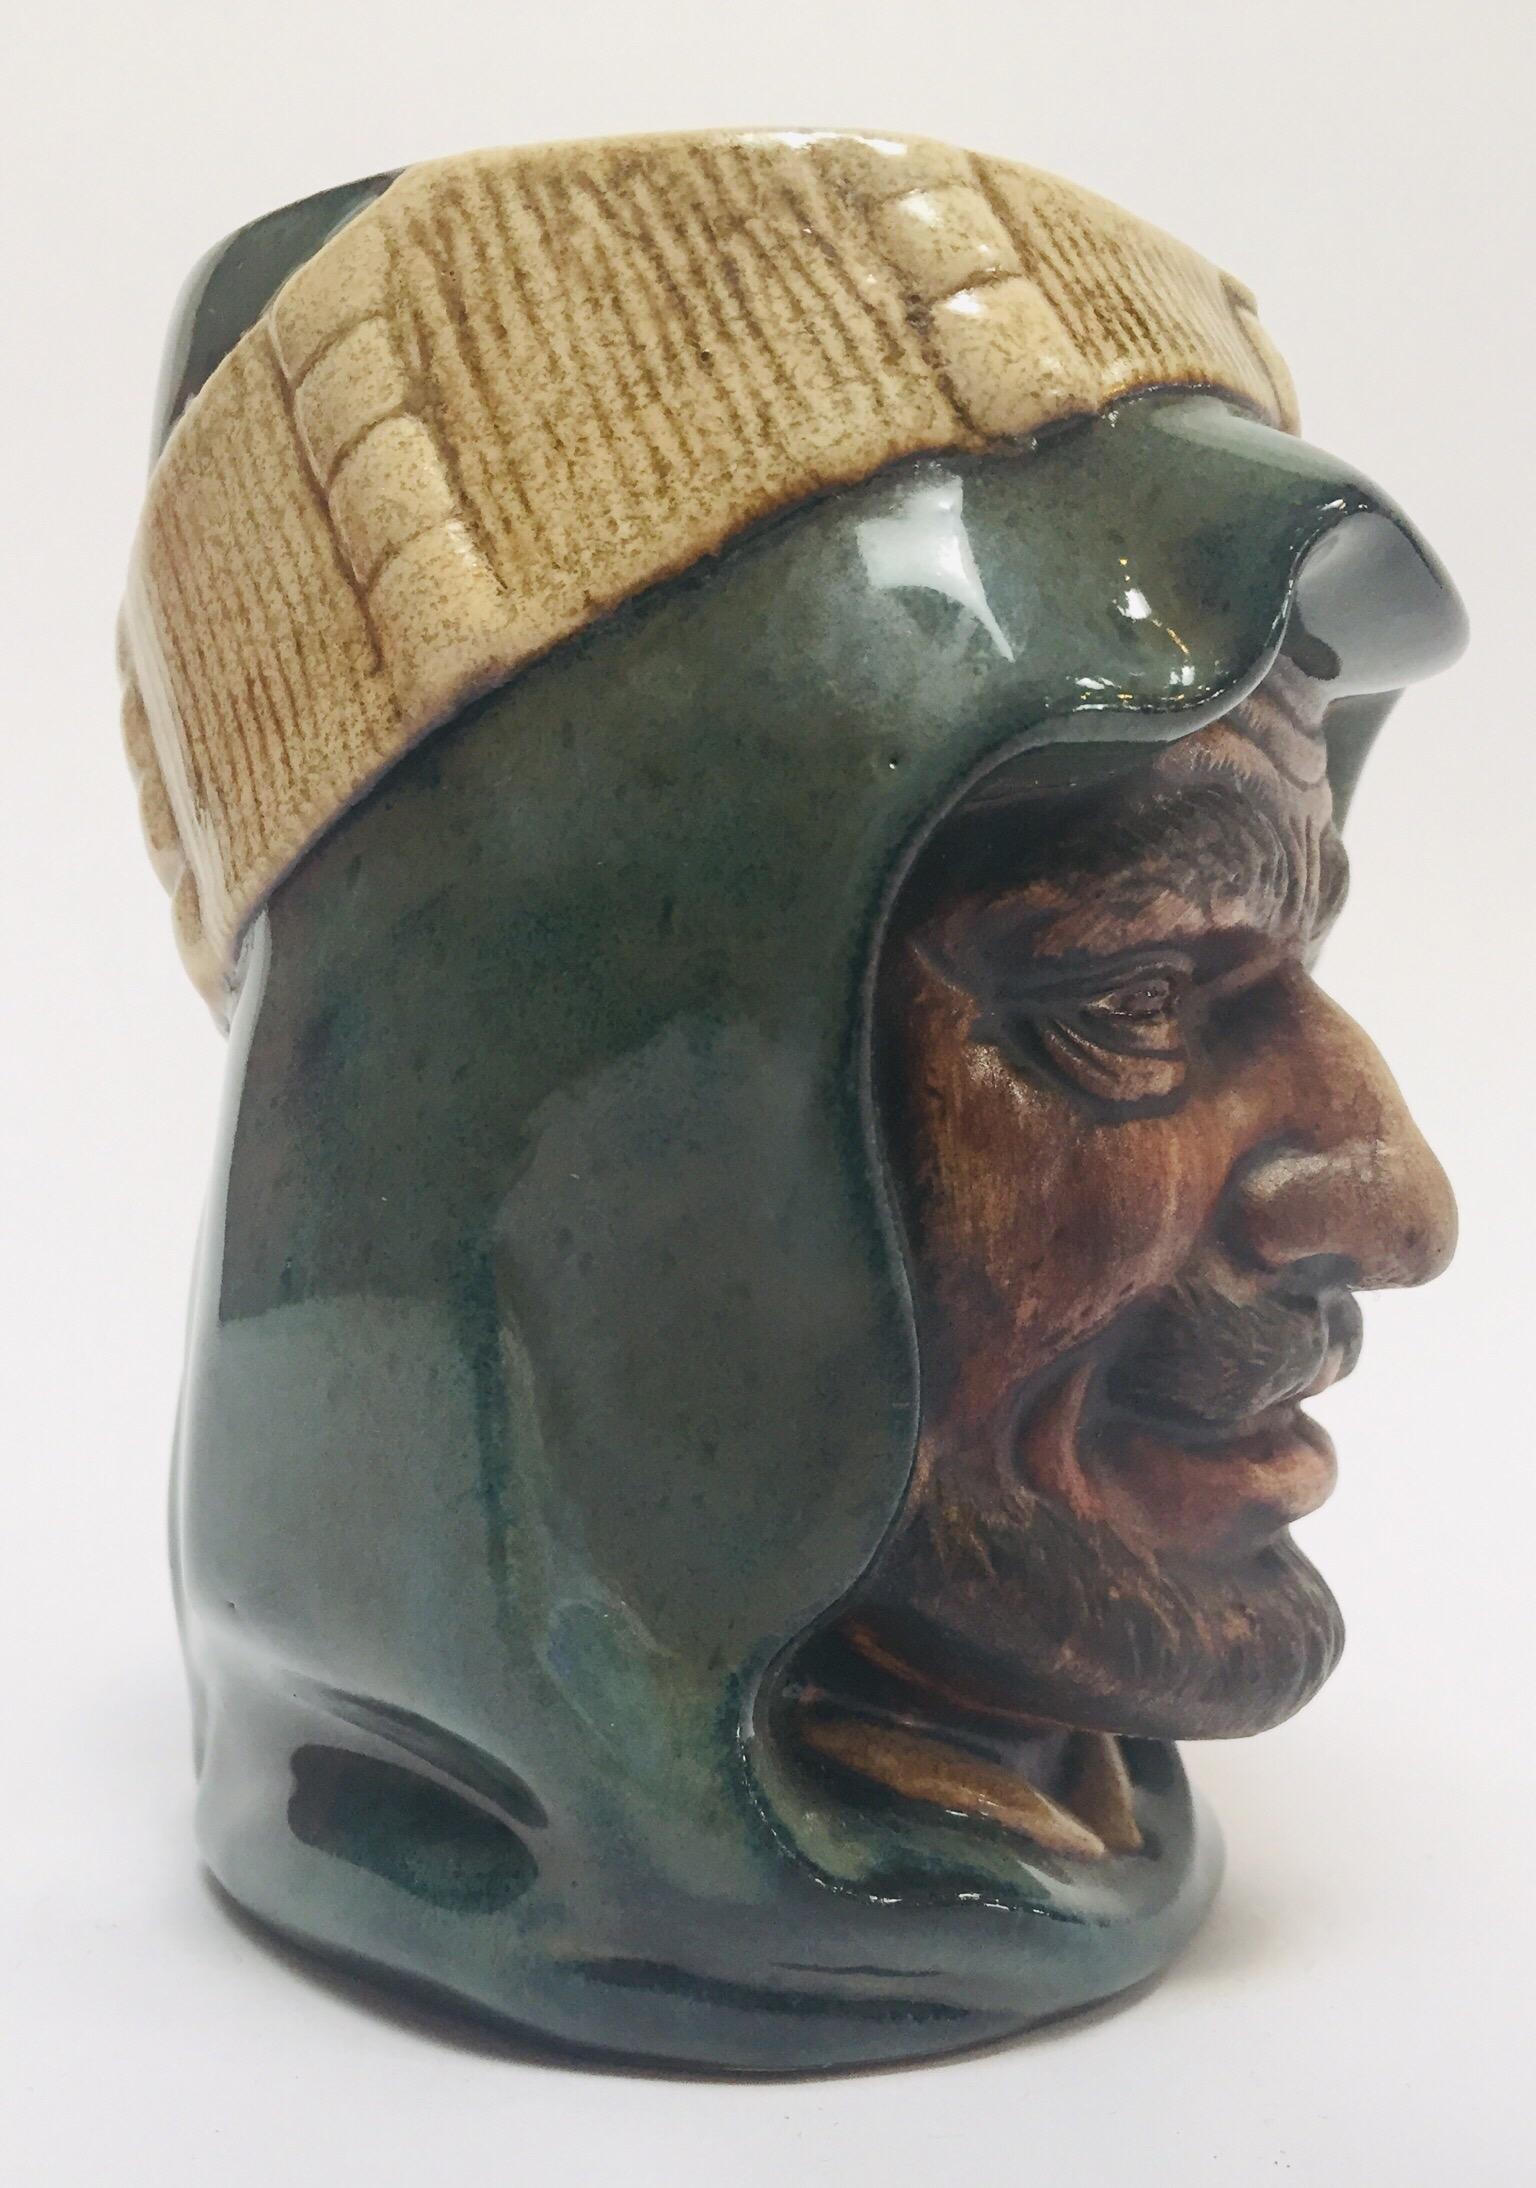 North American Vintage Ceramic Middle Eastern Arab Man Character Toby Mug